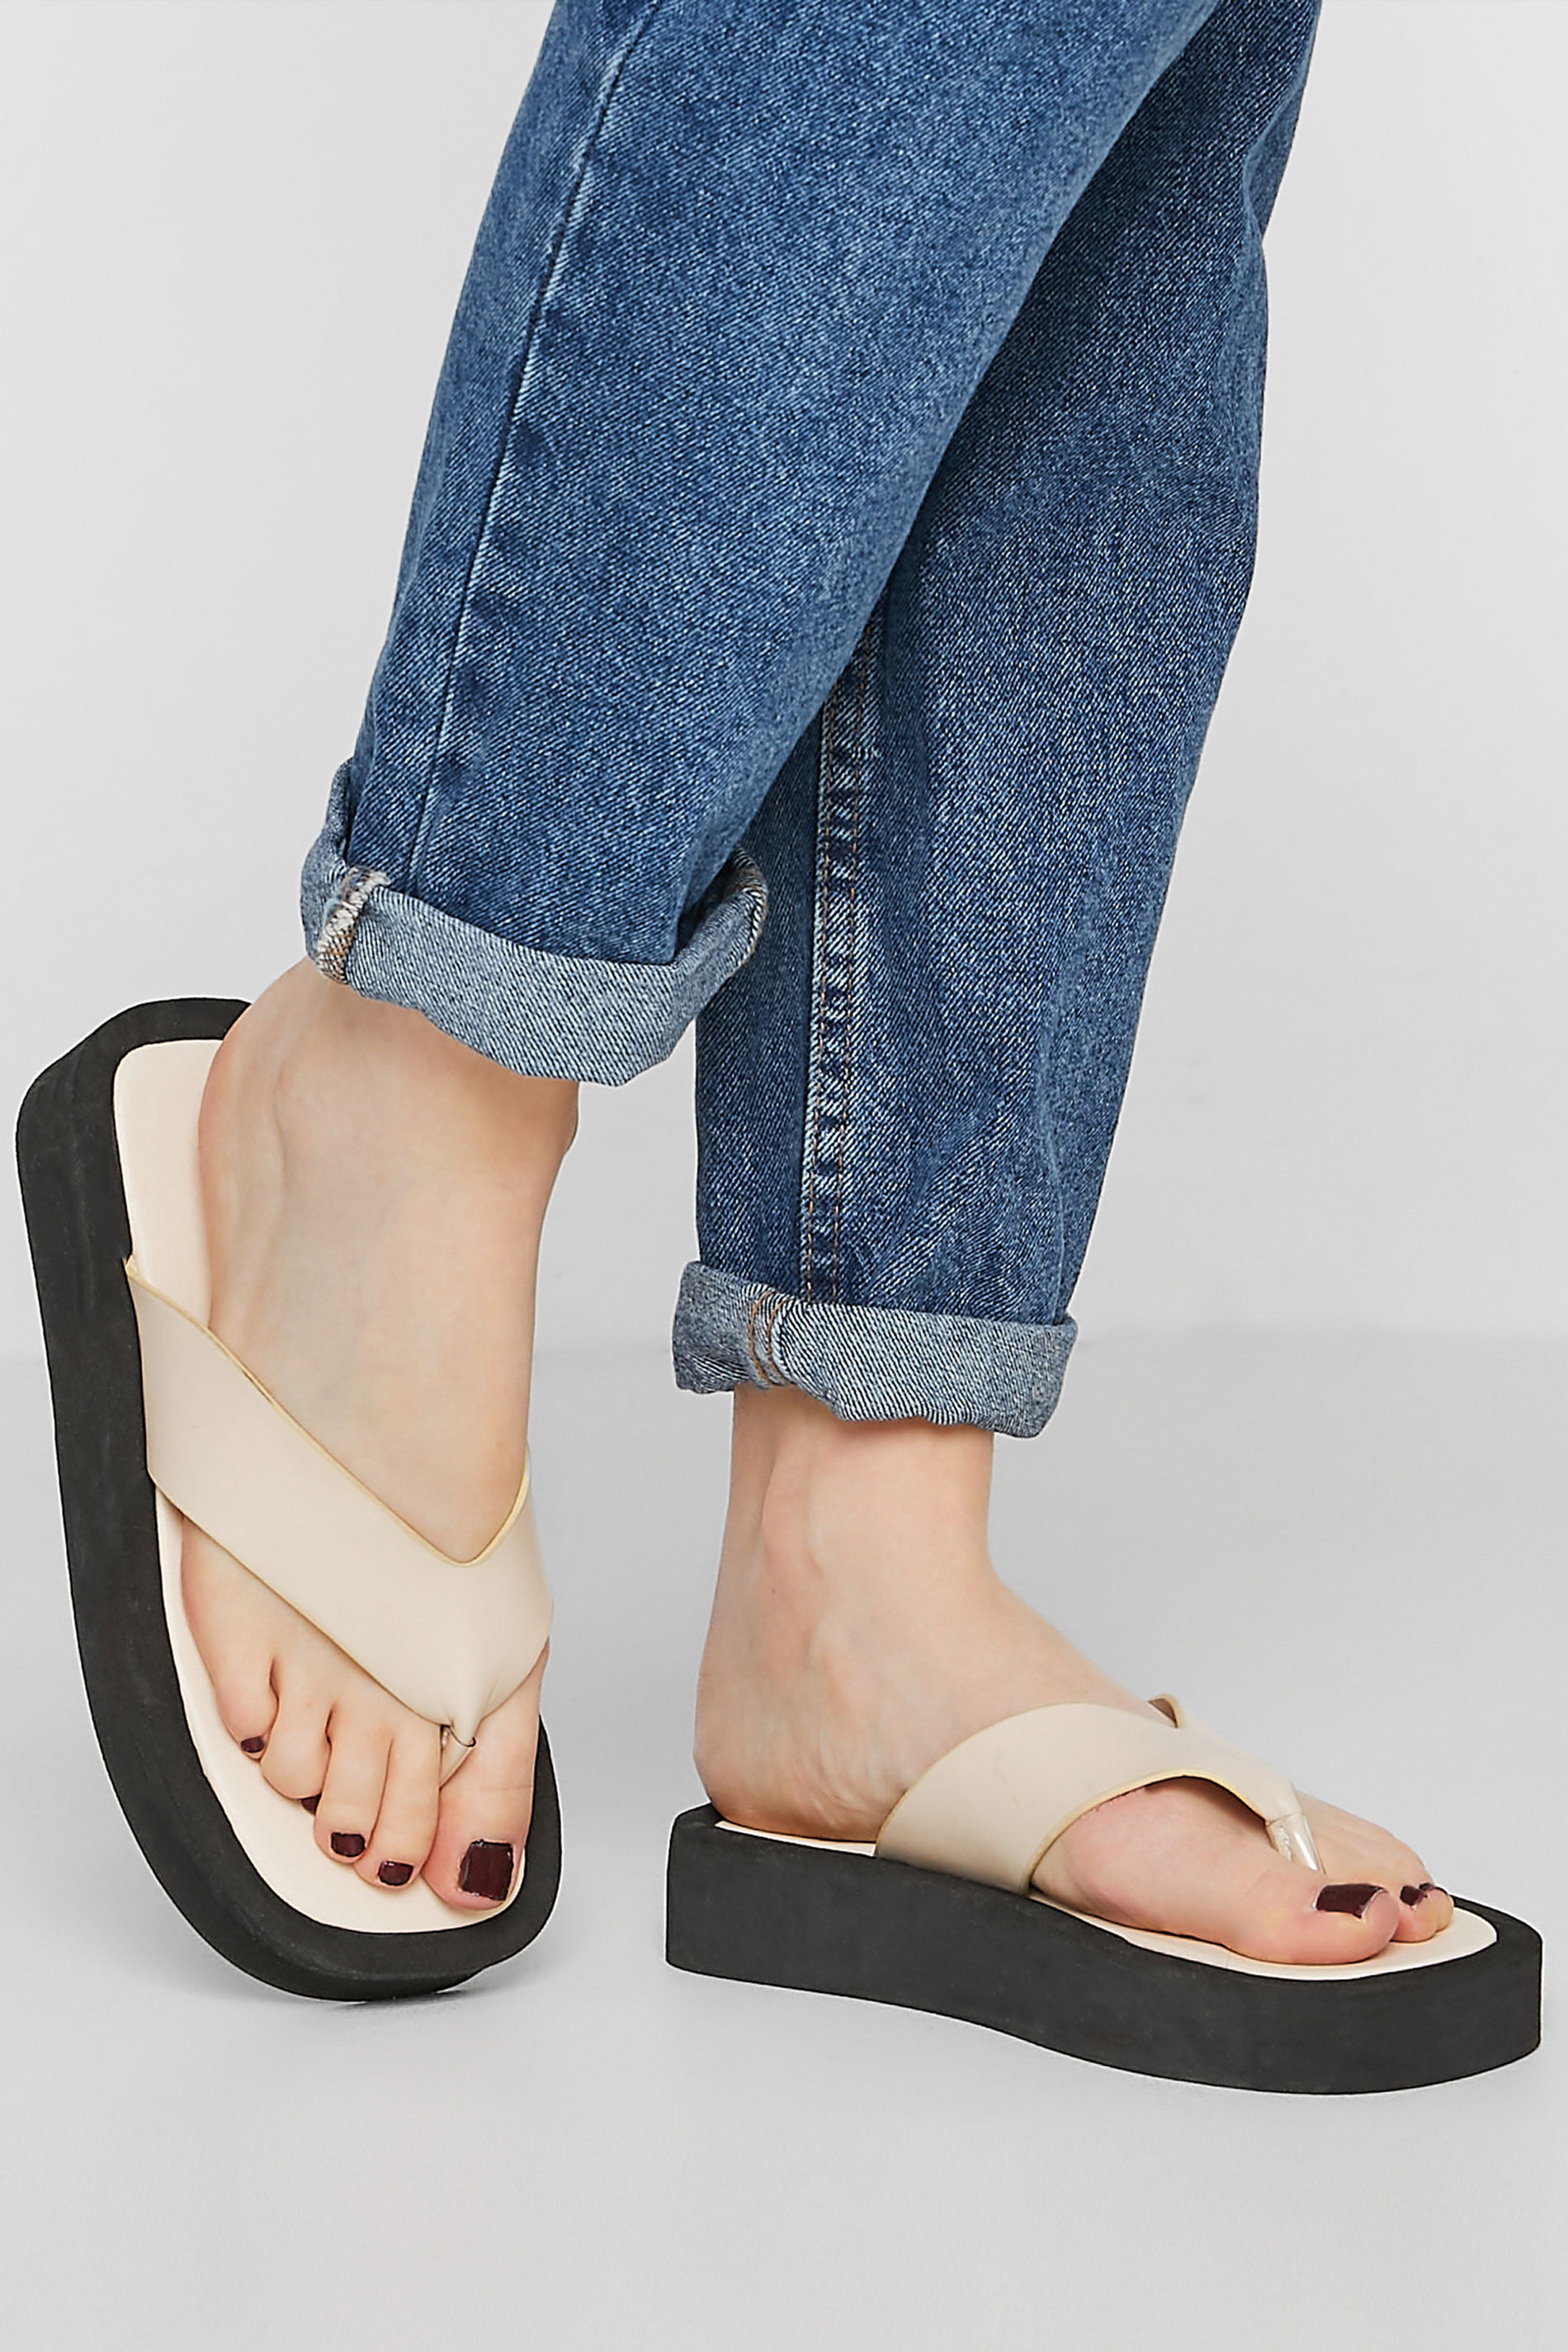 PixieGirl Cream Flatform Sandals In Standard D Fit_M.jpg